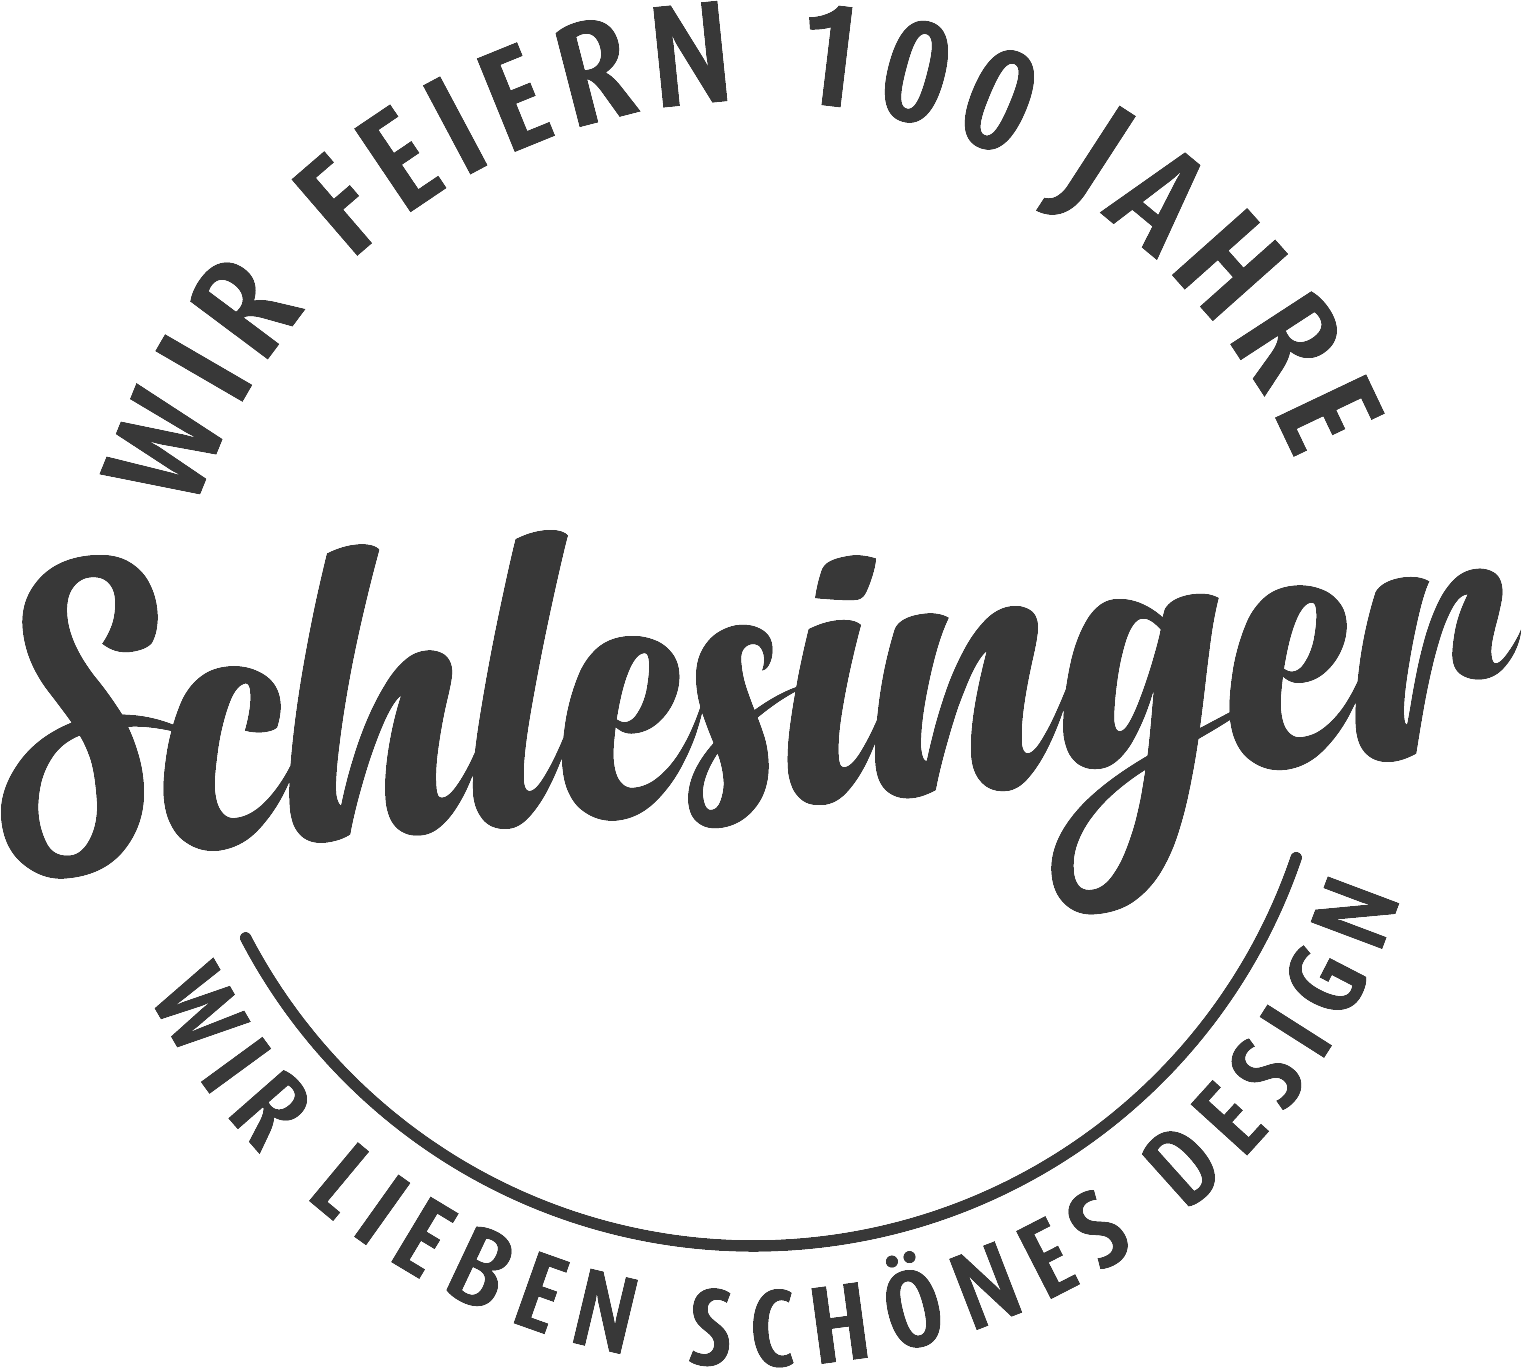 https://media-airport.de/wp-content/uploads/421692851-logo_schlesinger_jubilaeum_emblem_sw.png